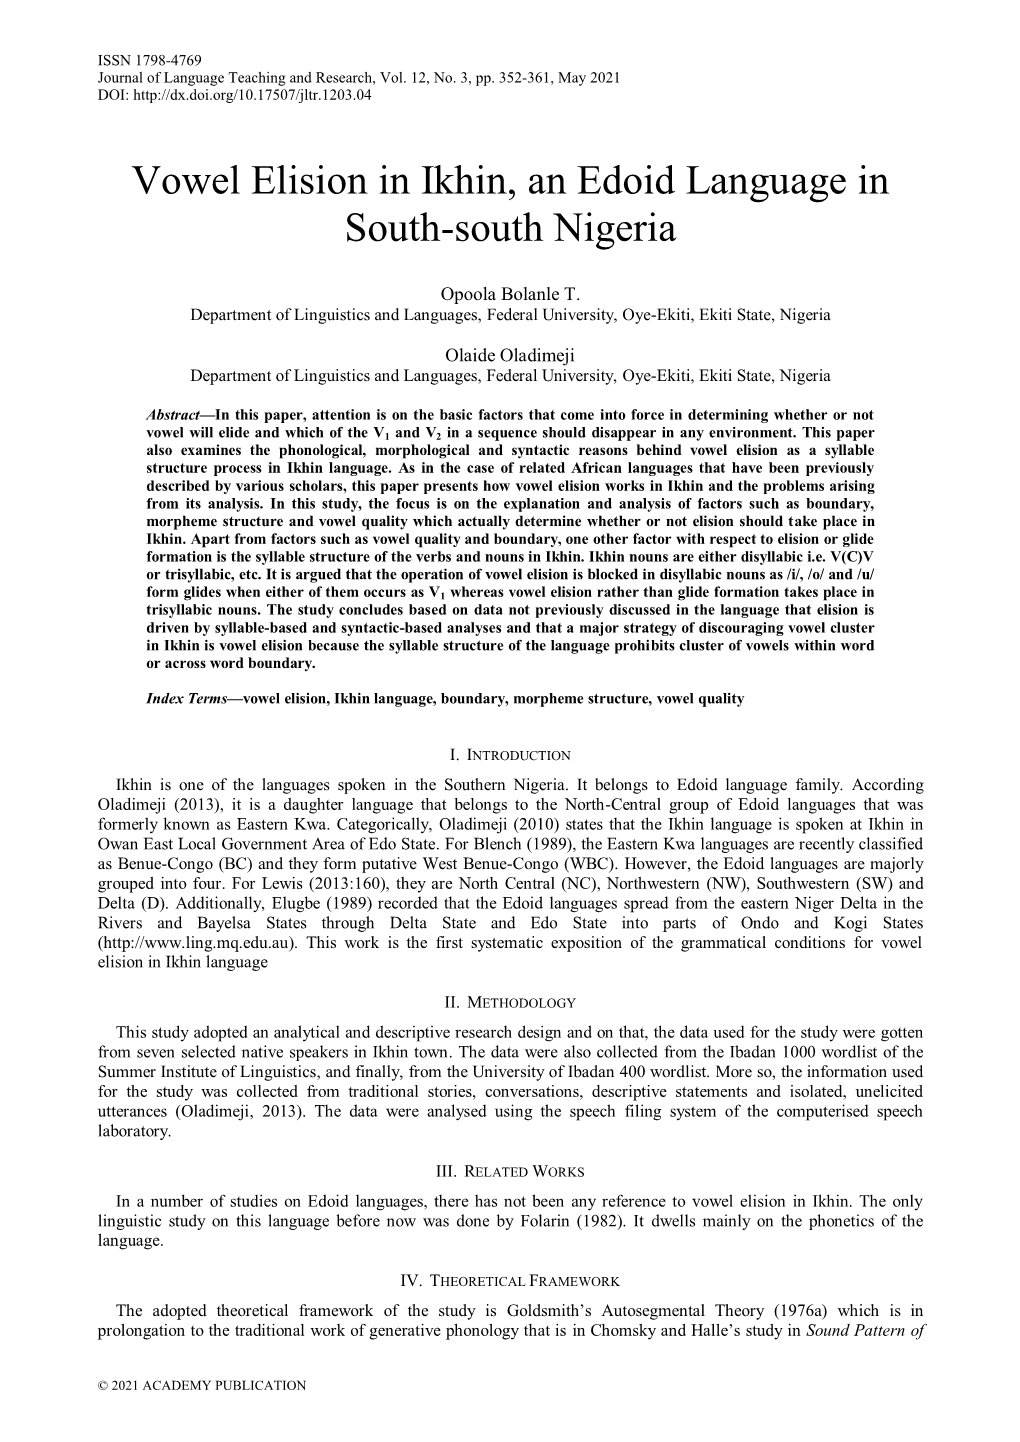 Vowel Elision in Ikhin, an Edoid Language in South-South Nigeria